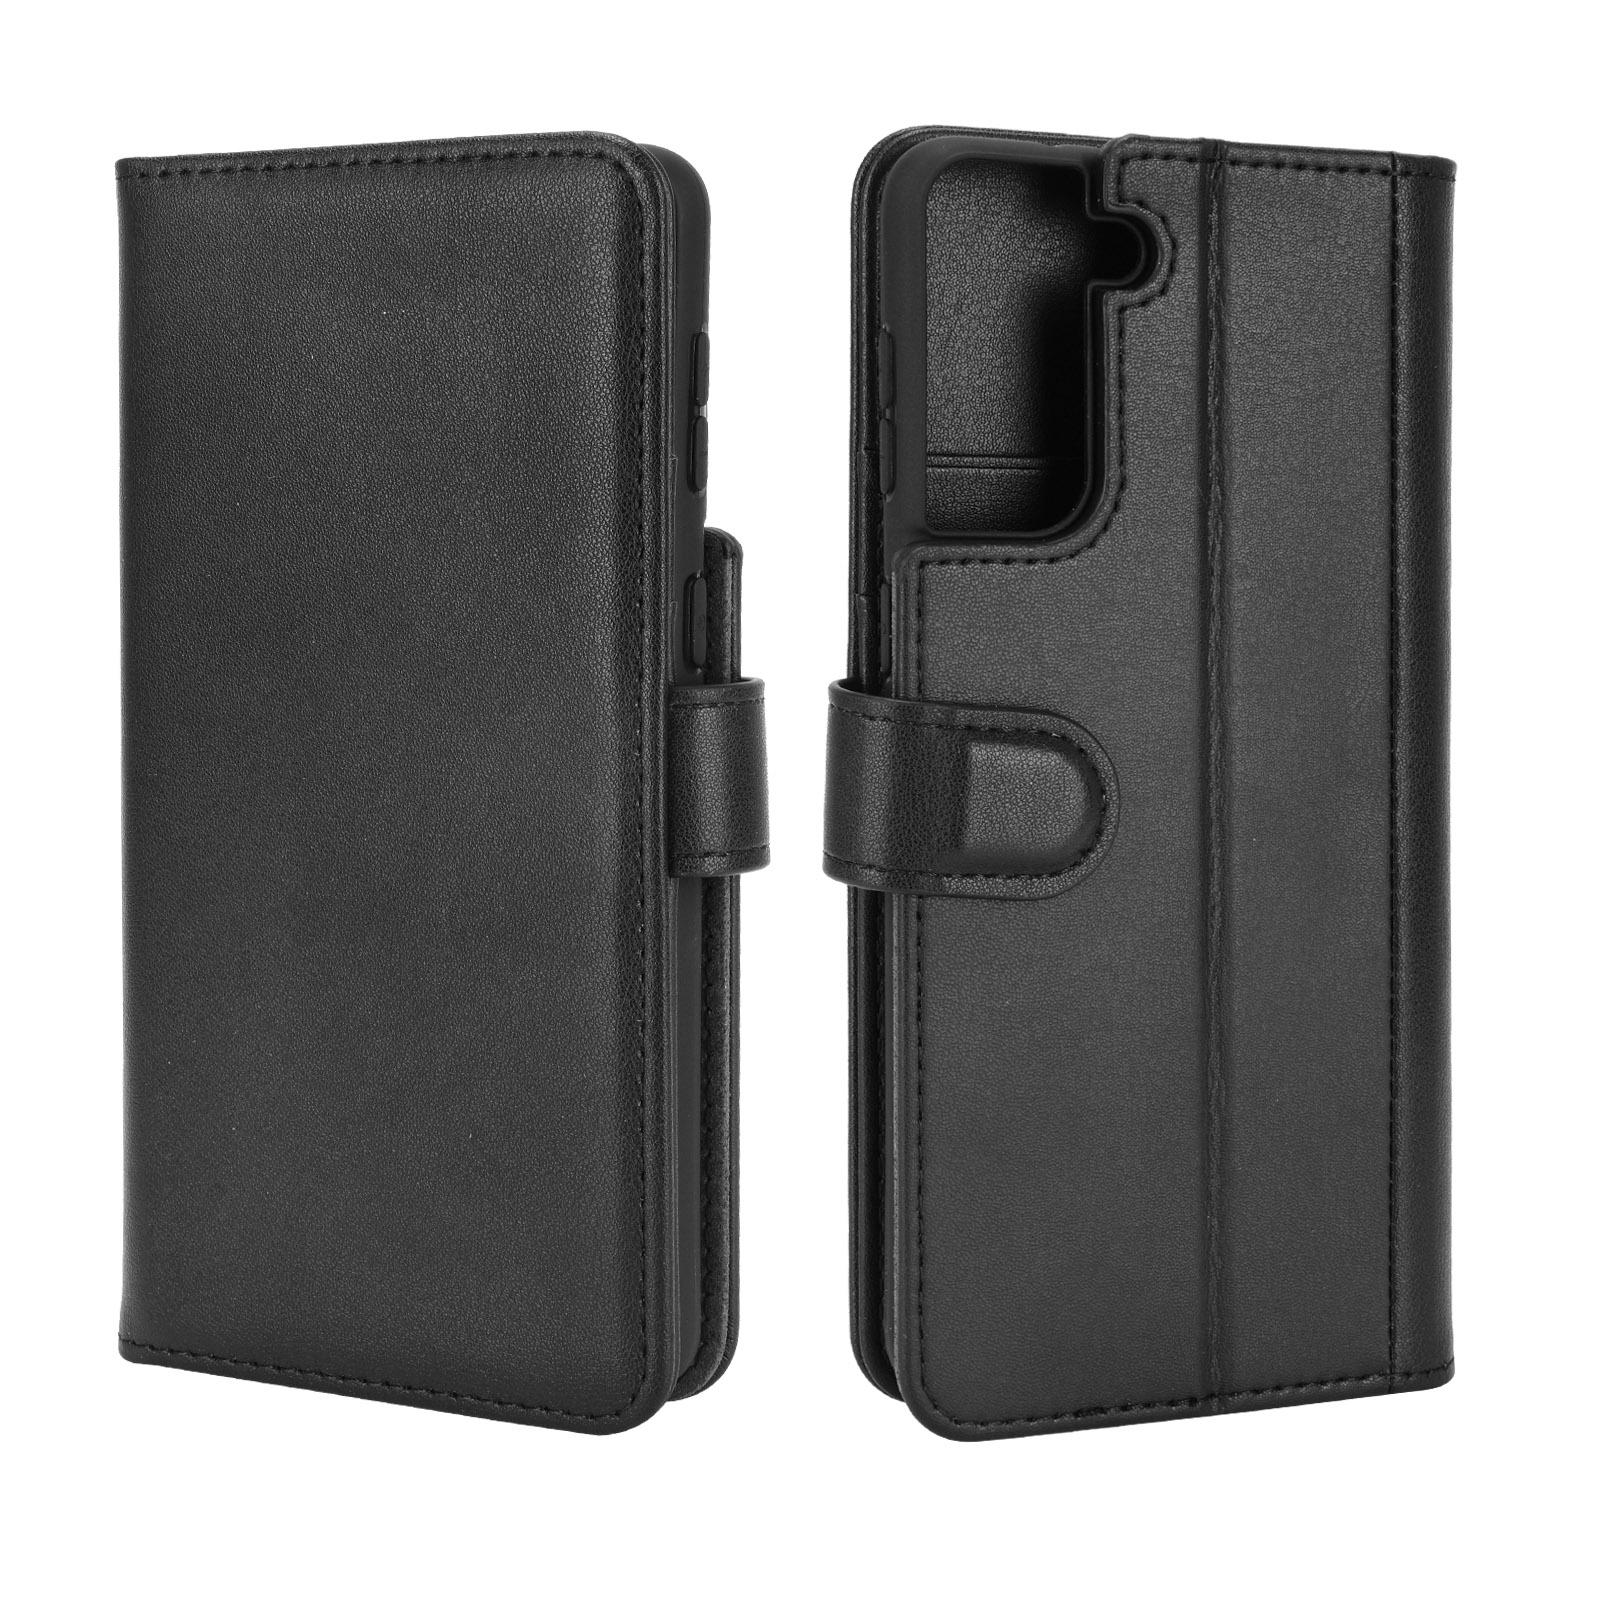 Samsung Galaxy S21 Plus Plånboksfodral i Äkta Läder, svart